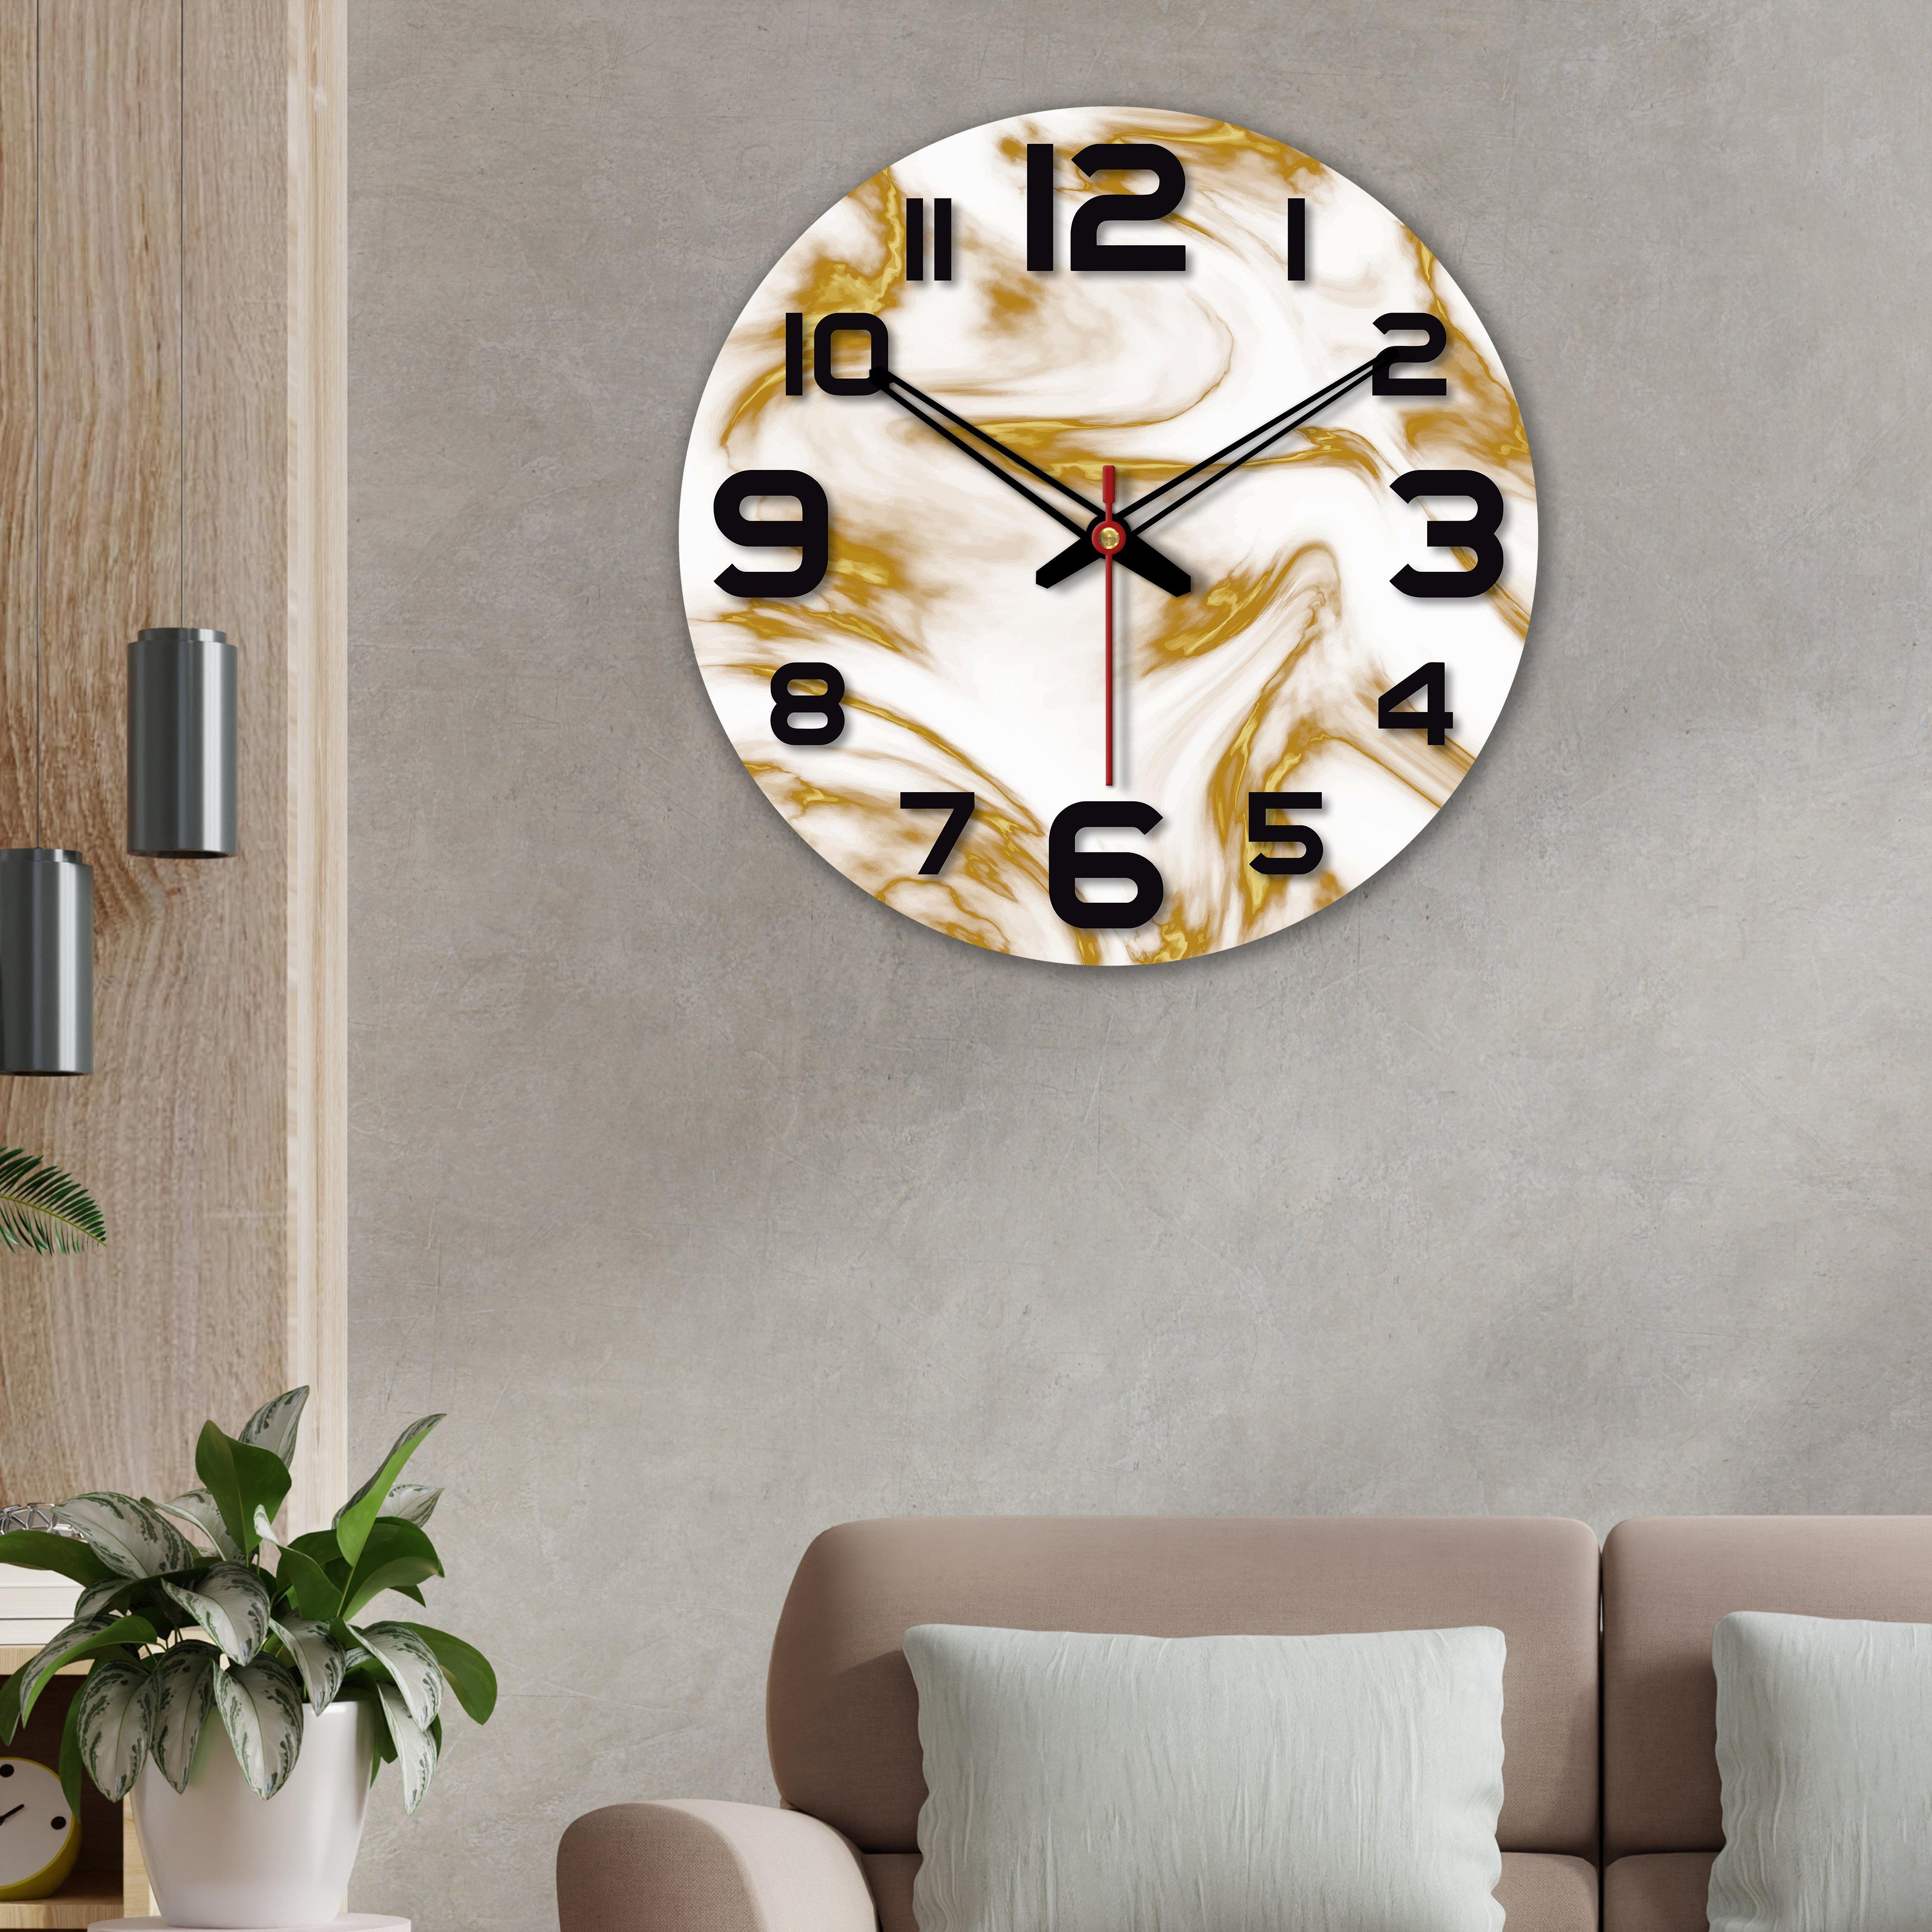 Texture Design Printed Wooden Wall Clock